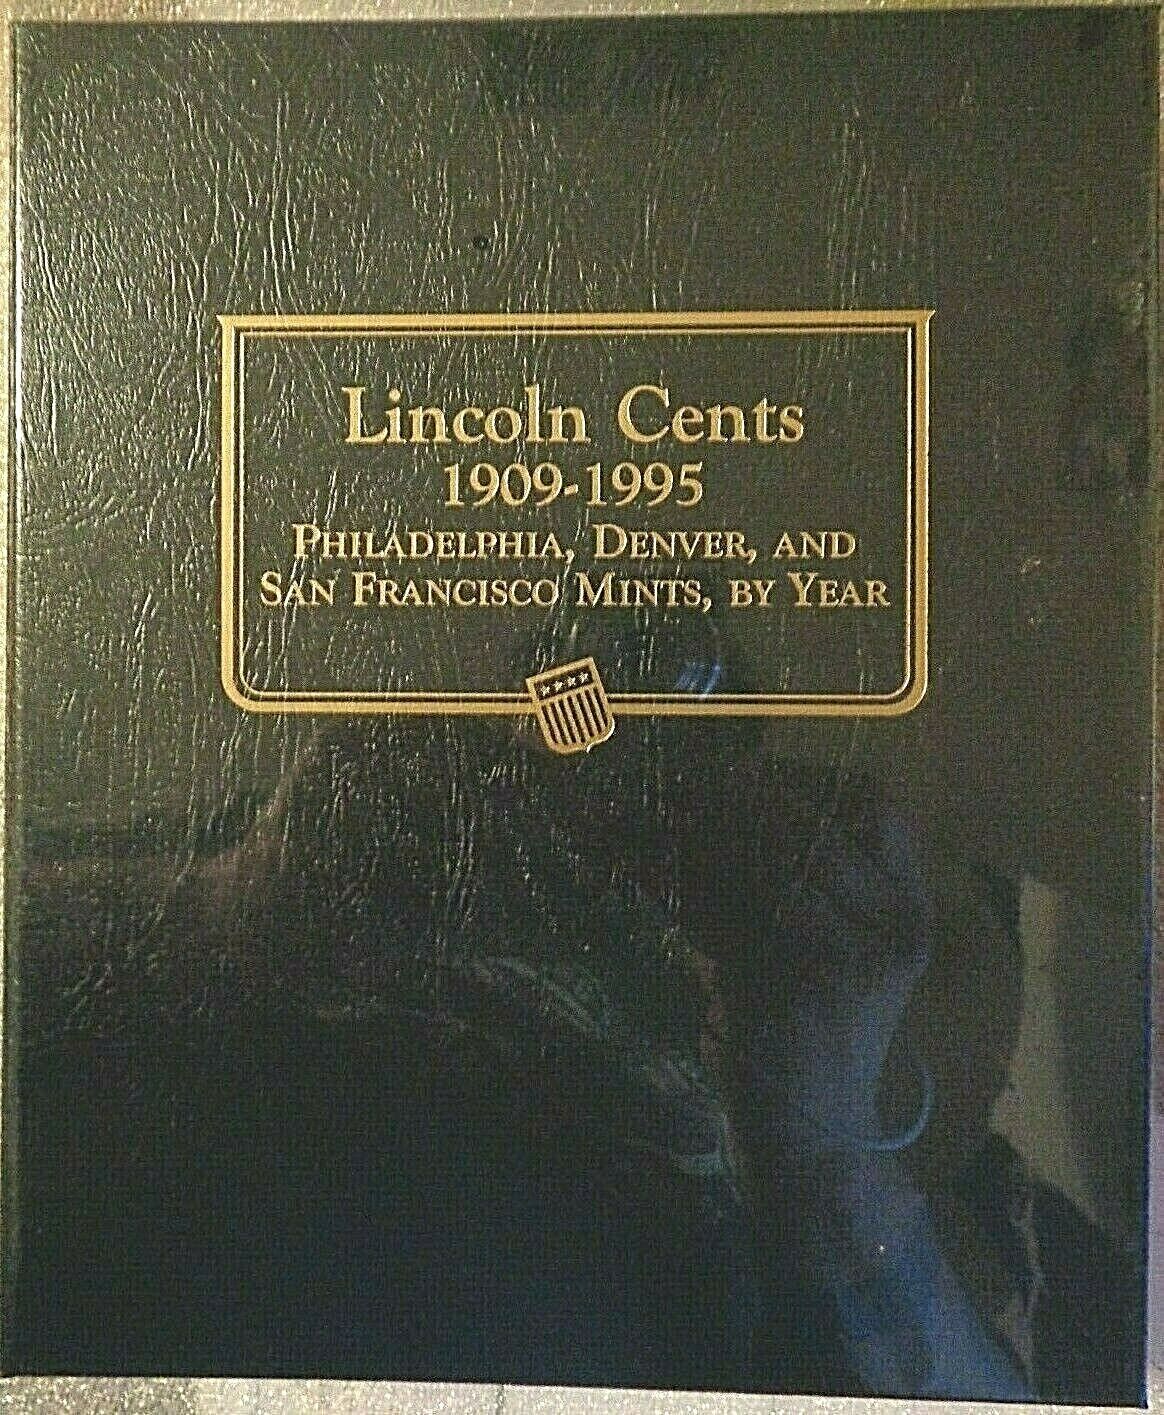 Whitman Classic Album #9112 Lincoln Cents 1909-1995, New